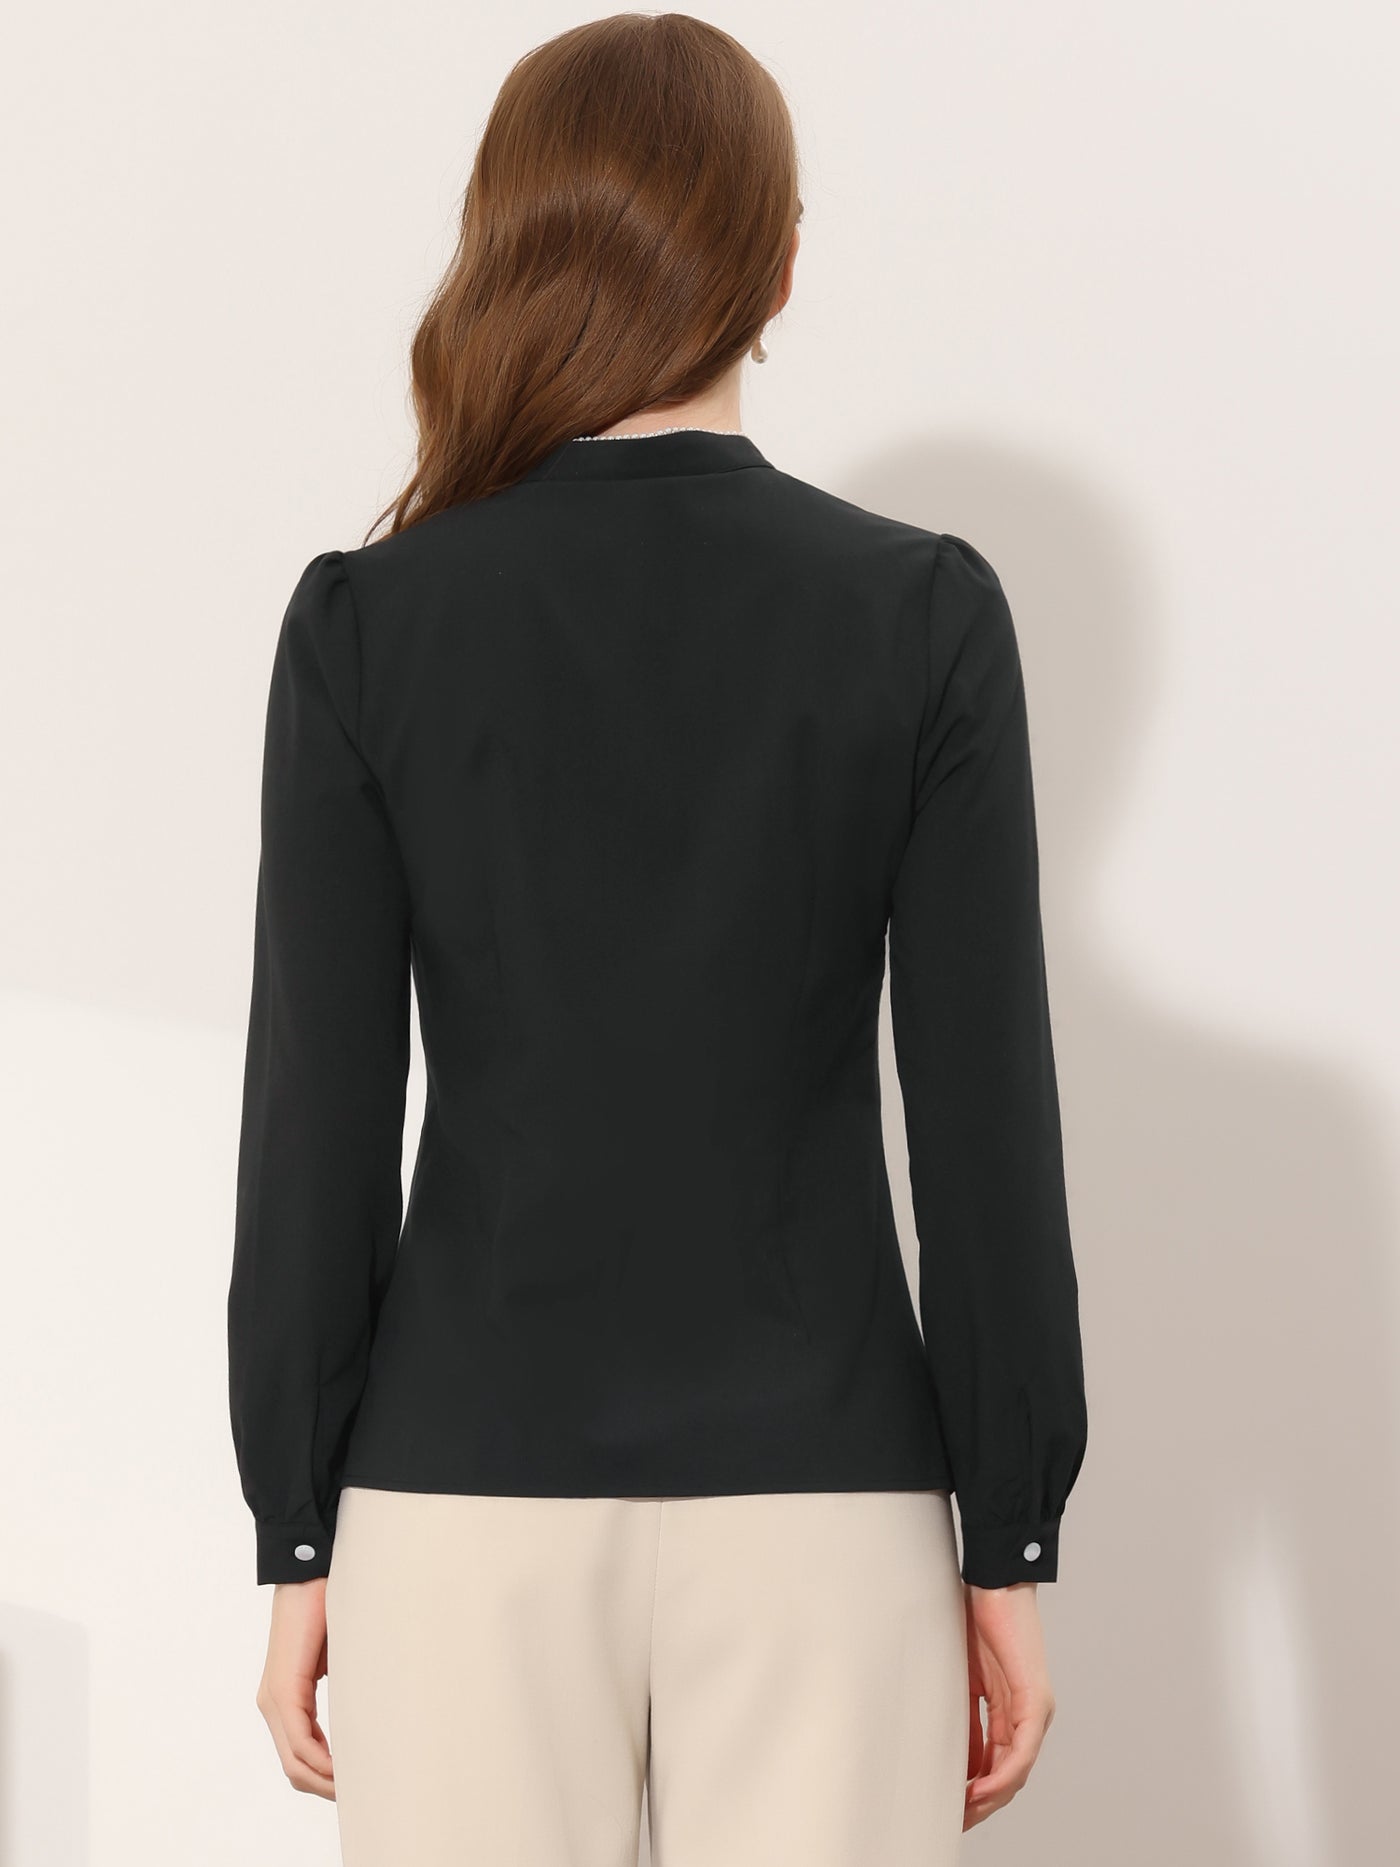 Allegra K Mock Neck Button Up Shirt for Work Office Long Sleeve Chiffon Blouse